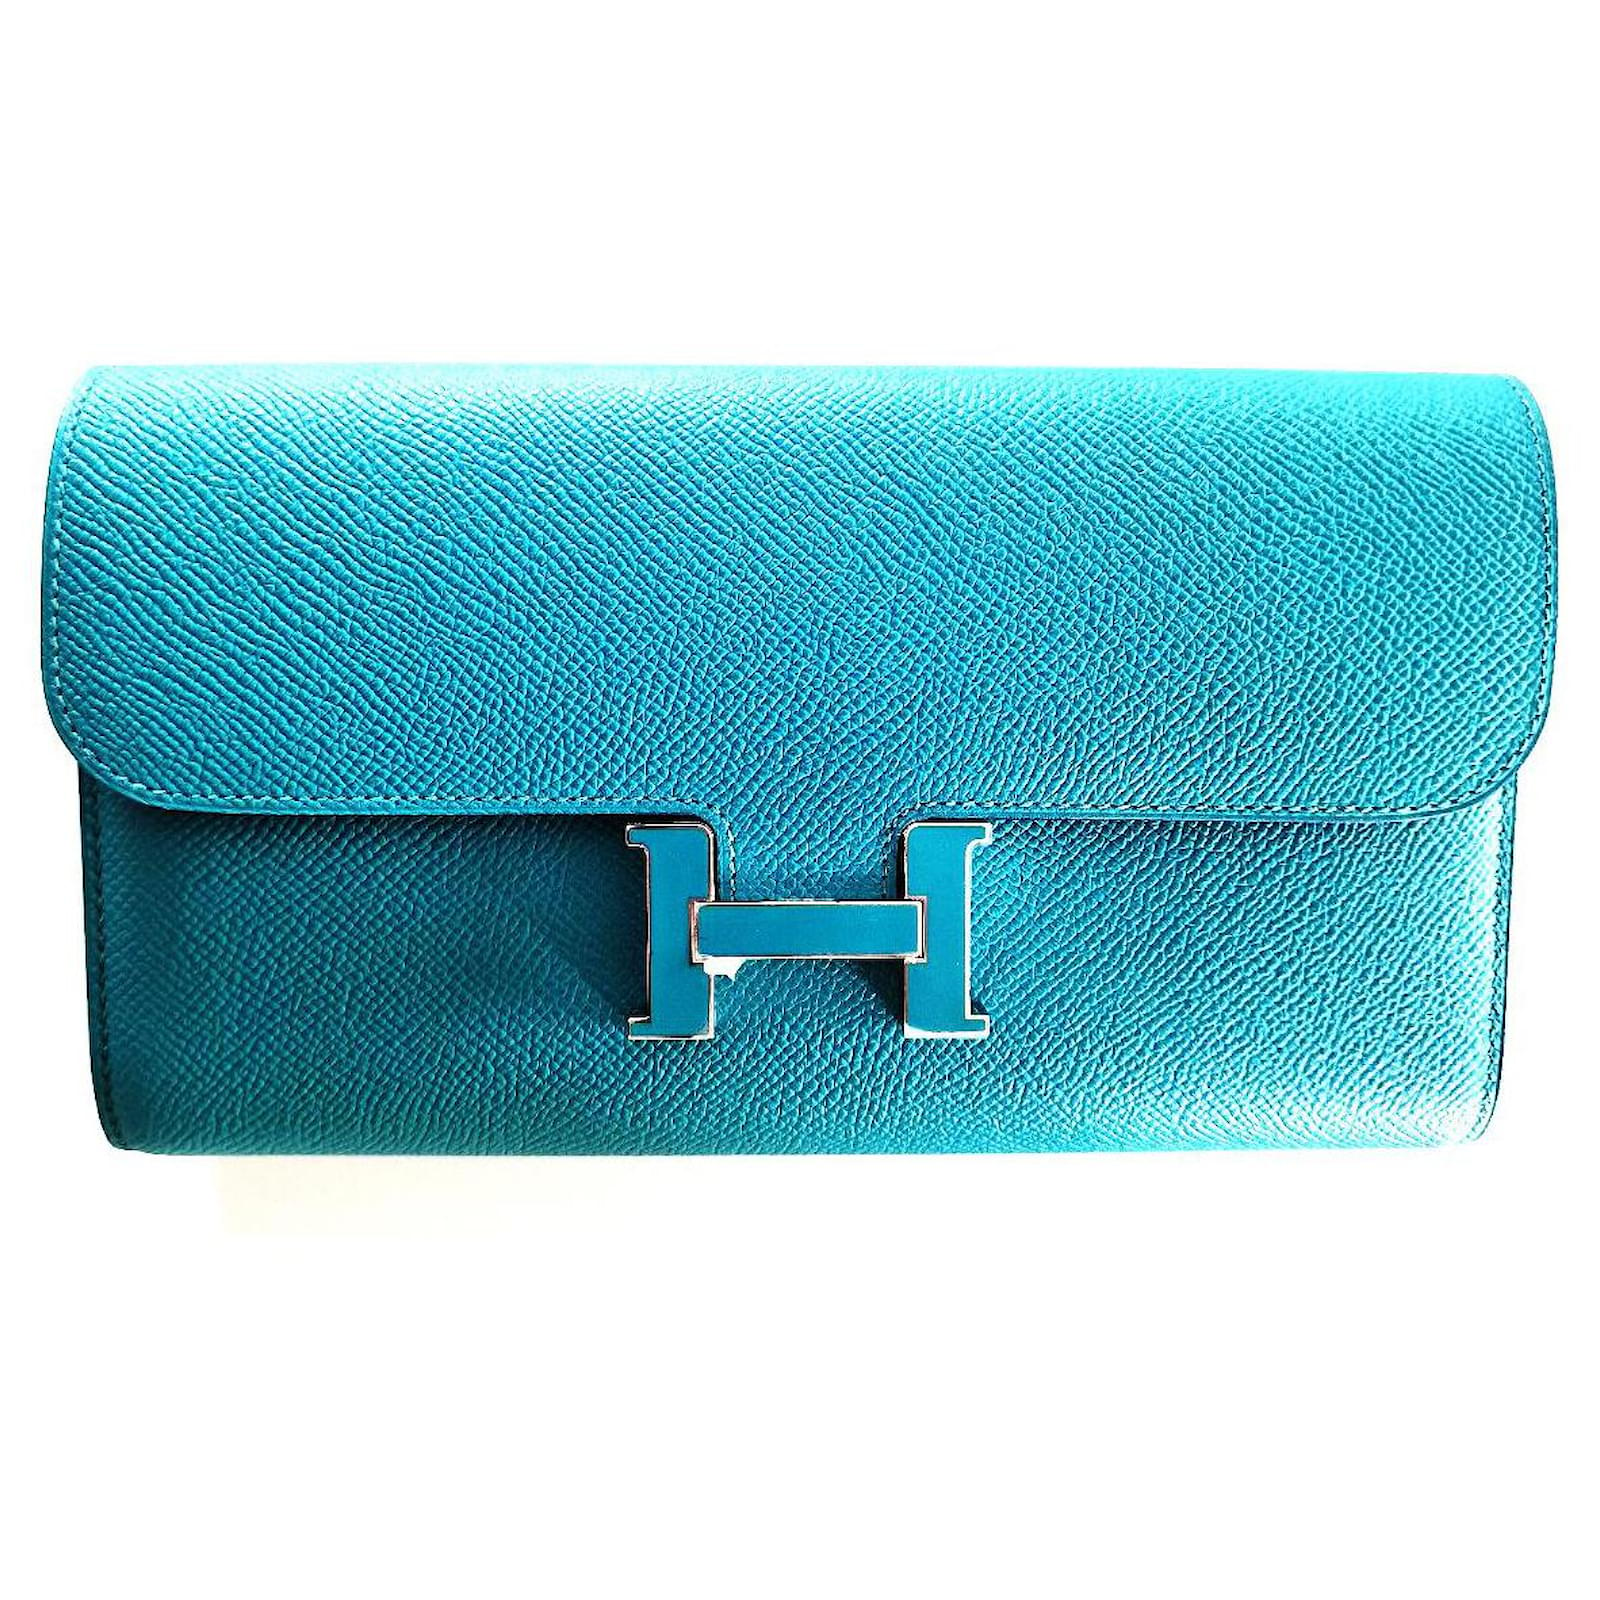 Constance leather purse